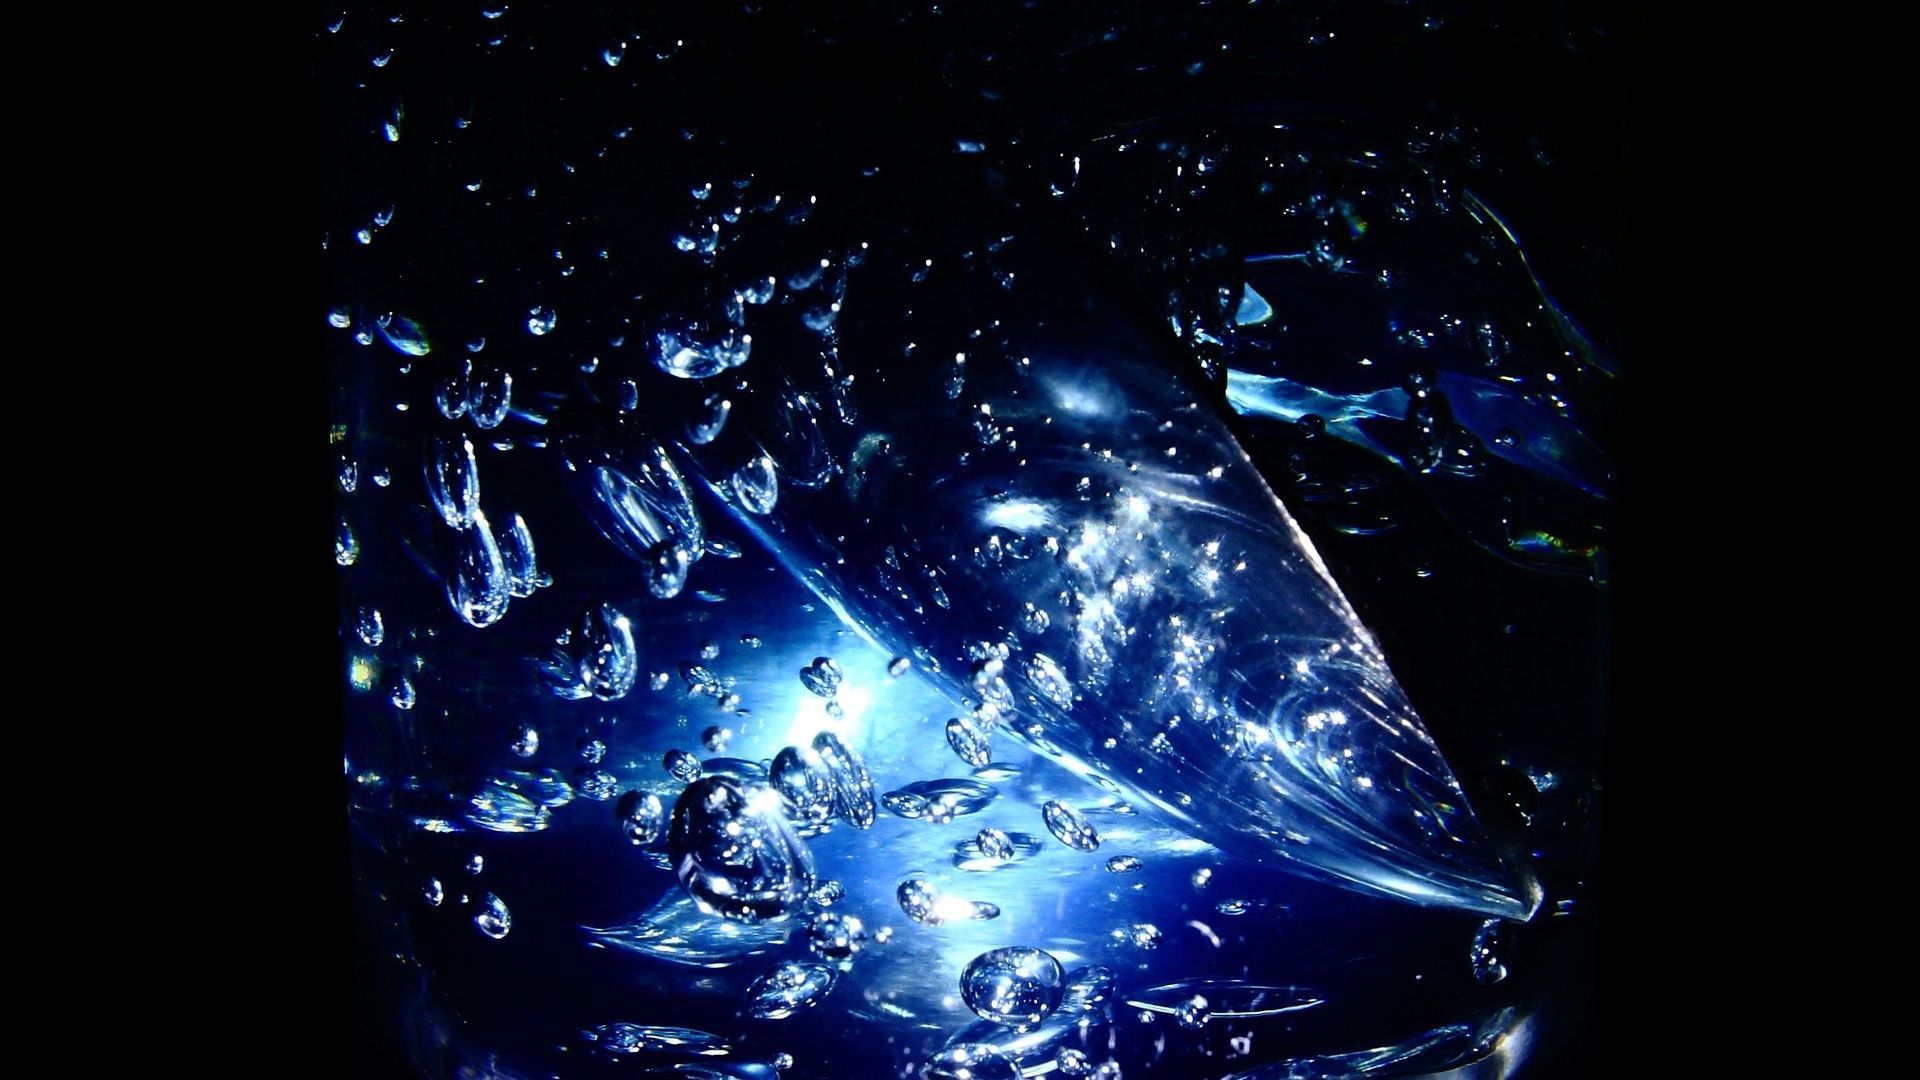 Abstract Blue Black Water Drops Wallpaper Beautiful